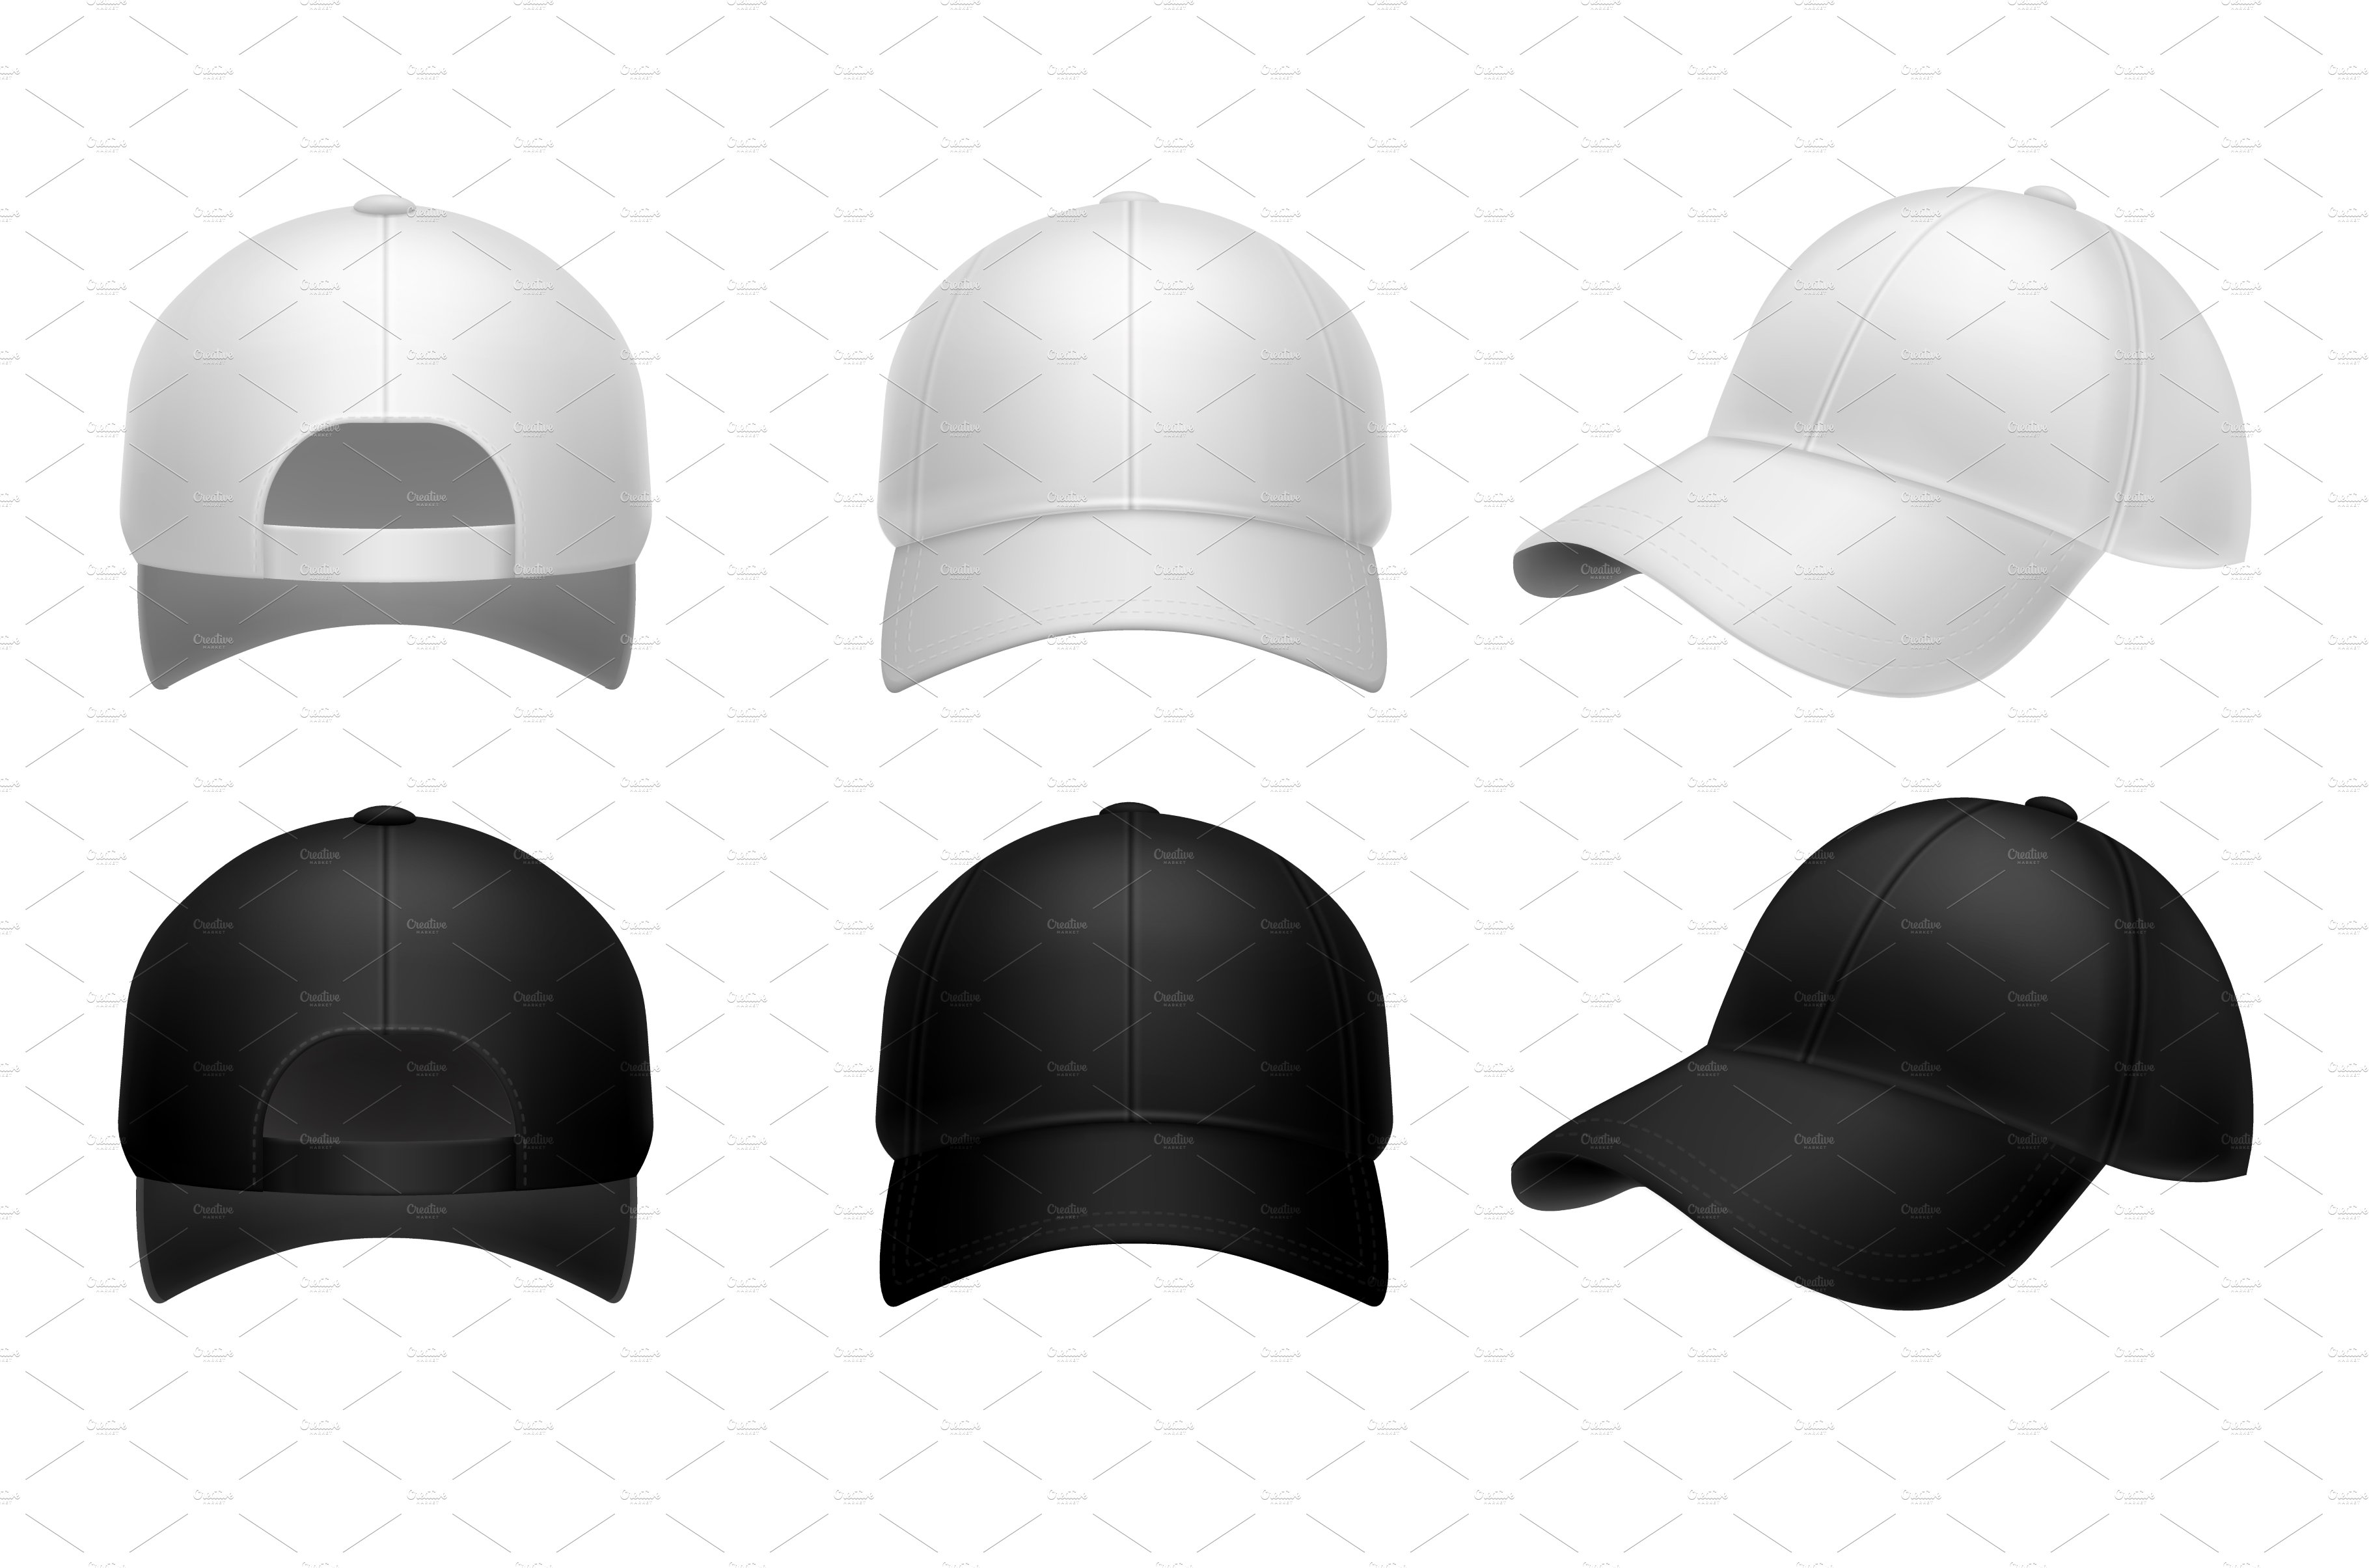 Realistic baseball cap. Black and cover image.